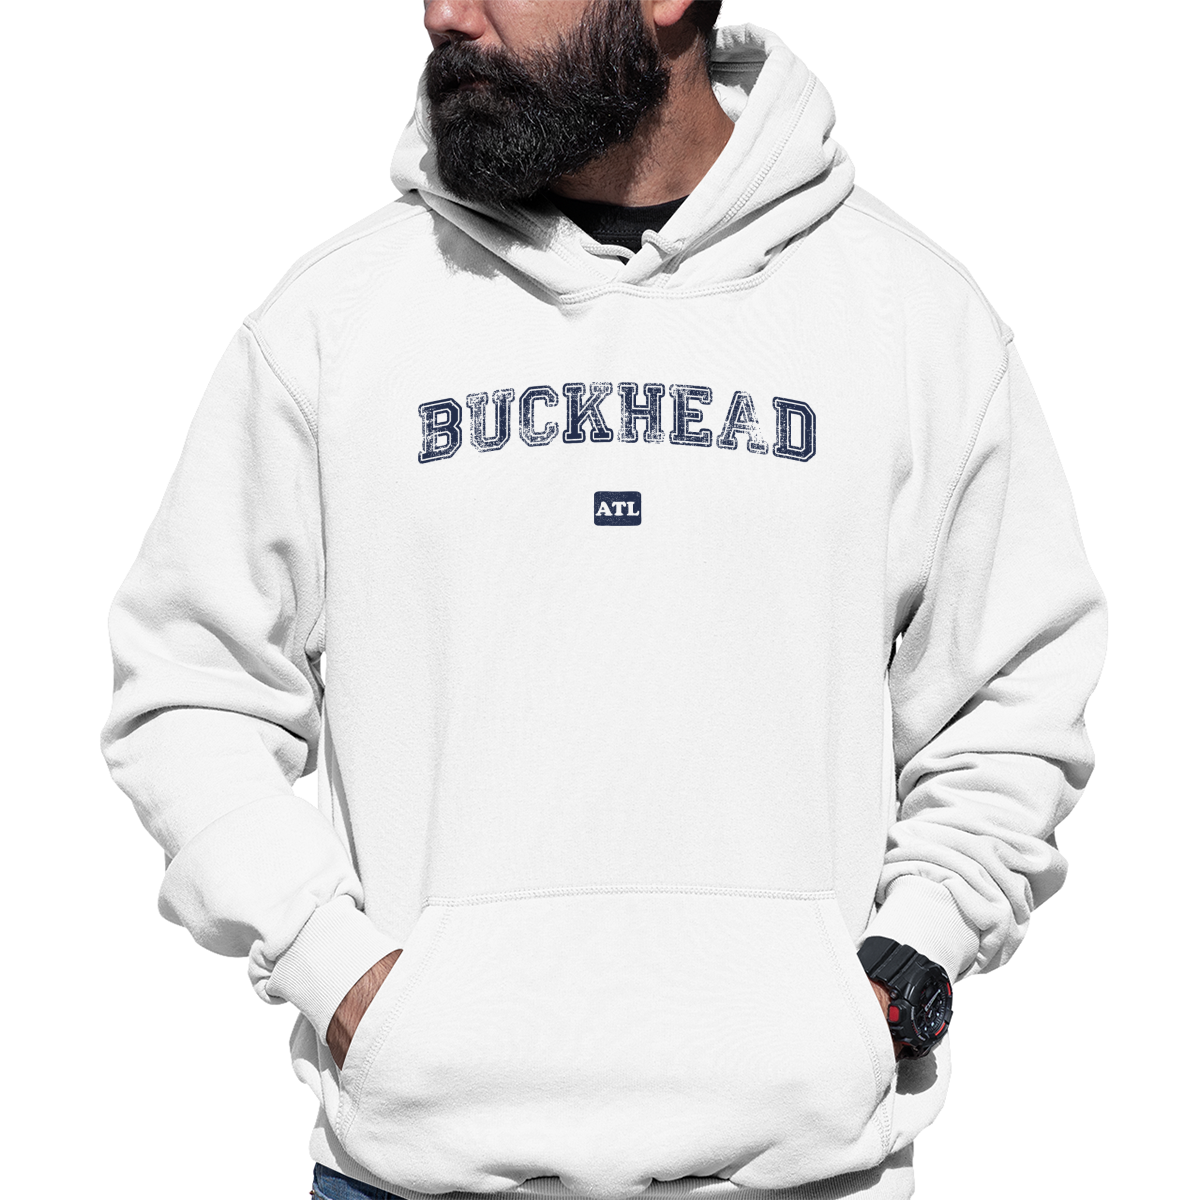 Buckhead ATL Represent Unisex Hoodie | White